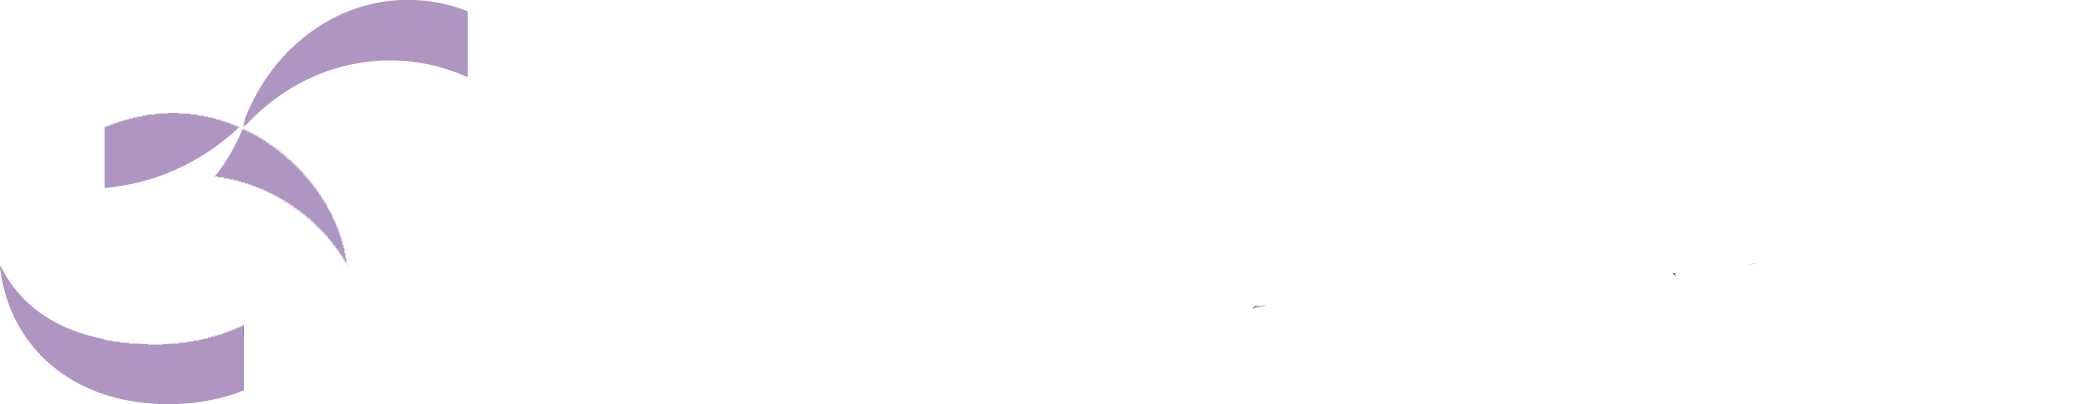 CHRISTUS Foundation for HealthCare